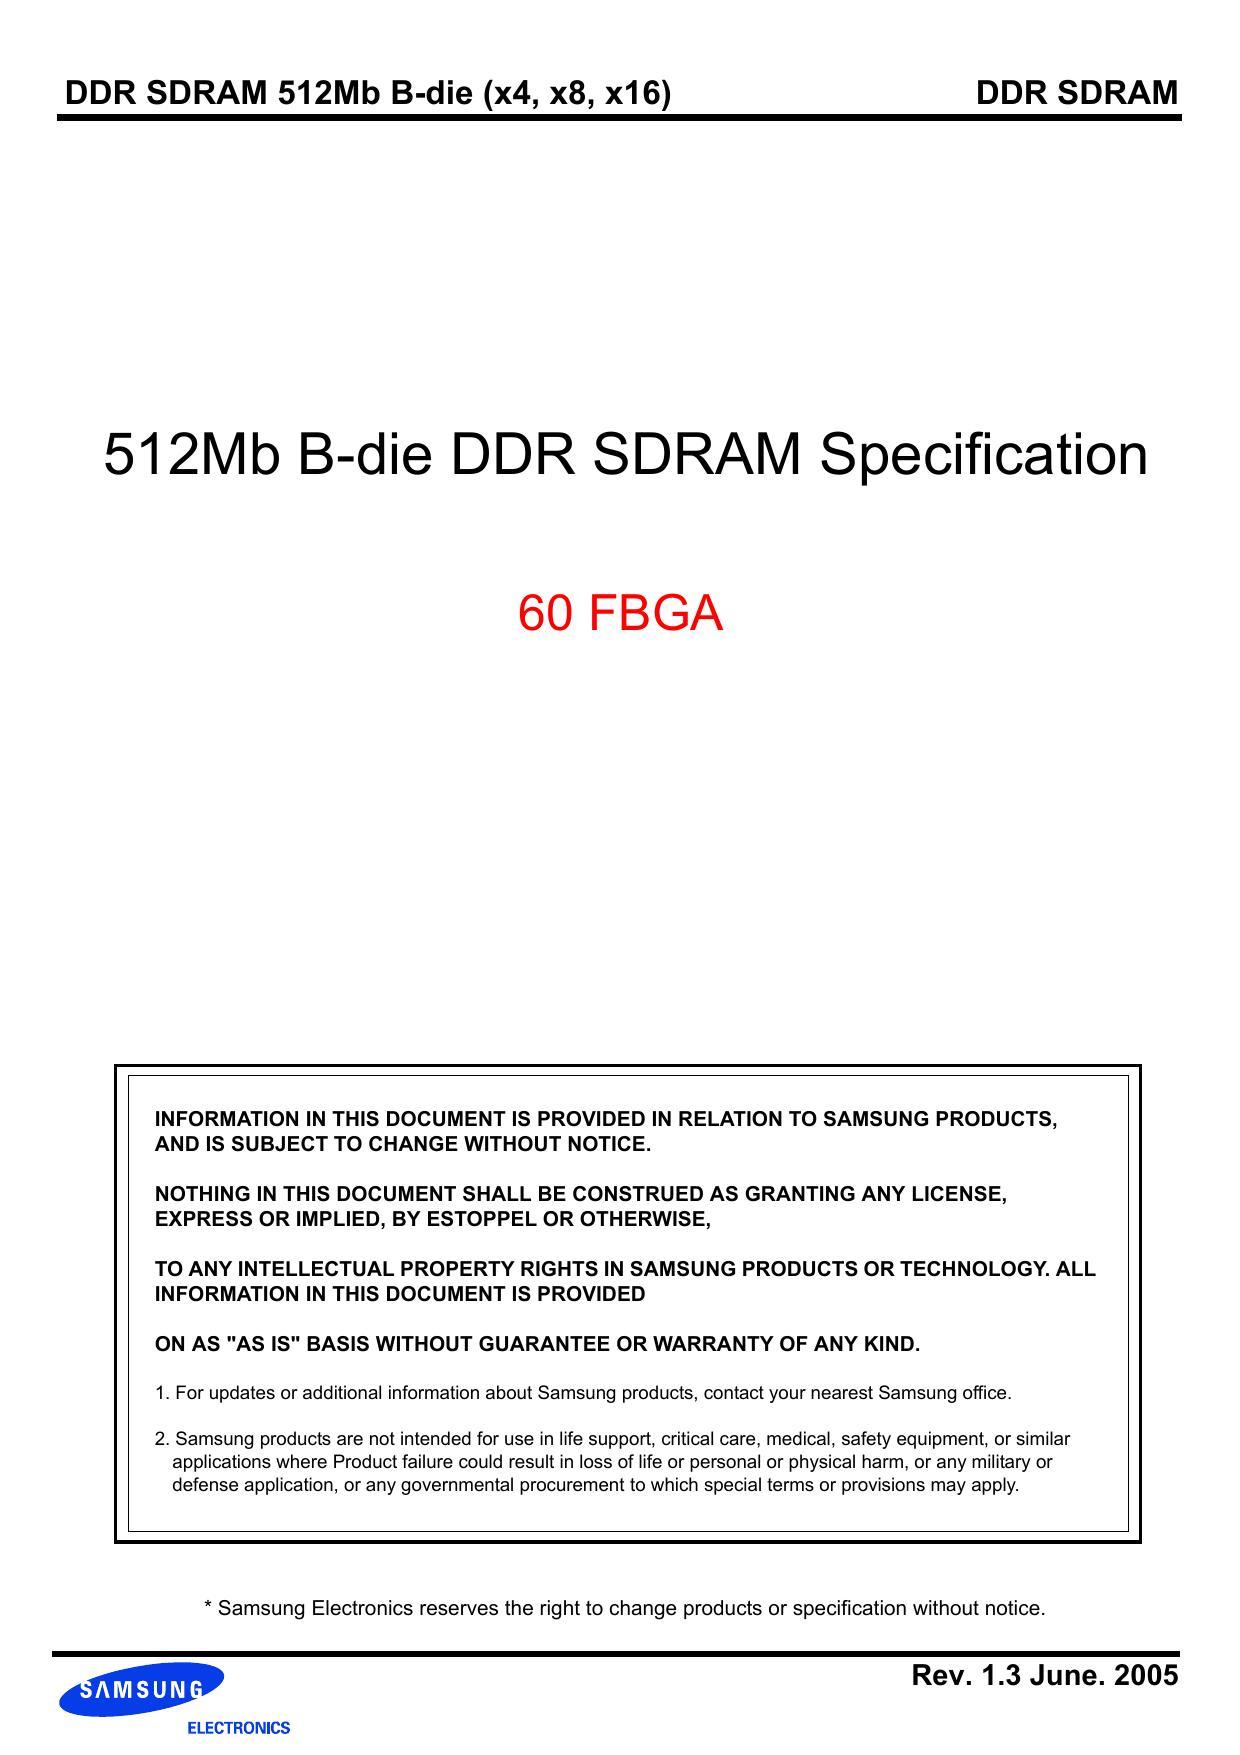 ddr-sdram-512mb-b-die-x4-x8-x16.pdf